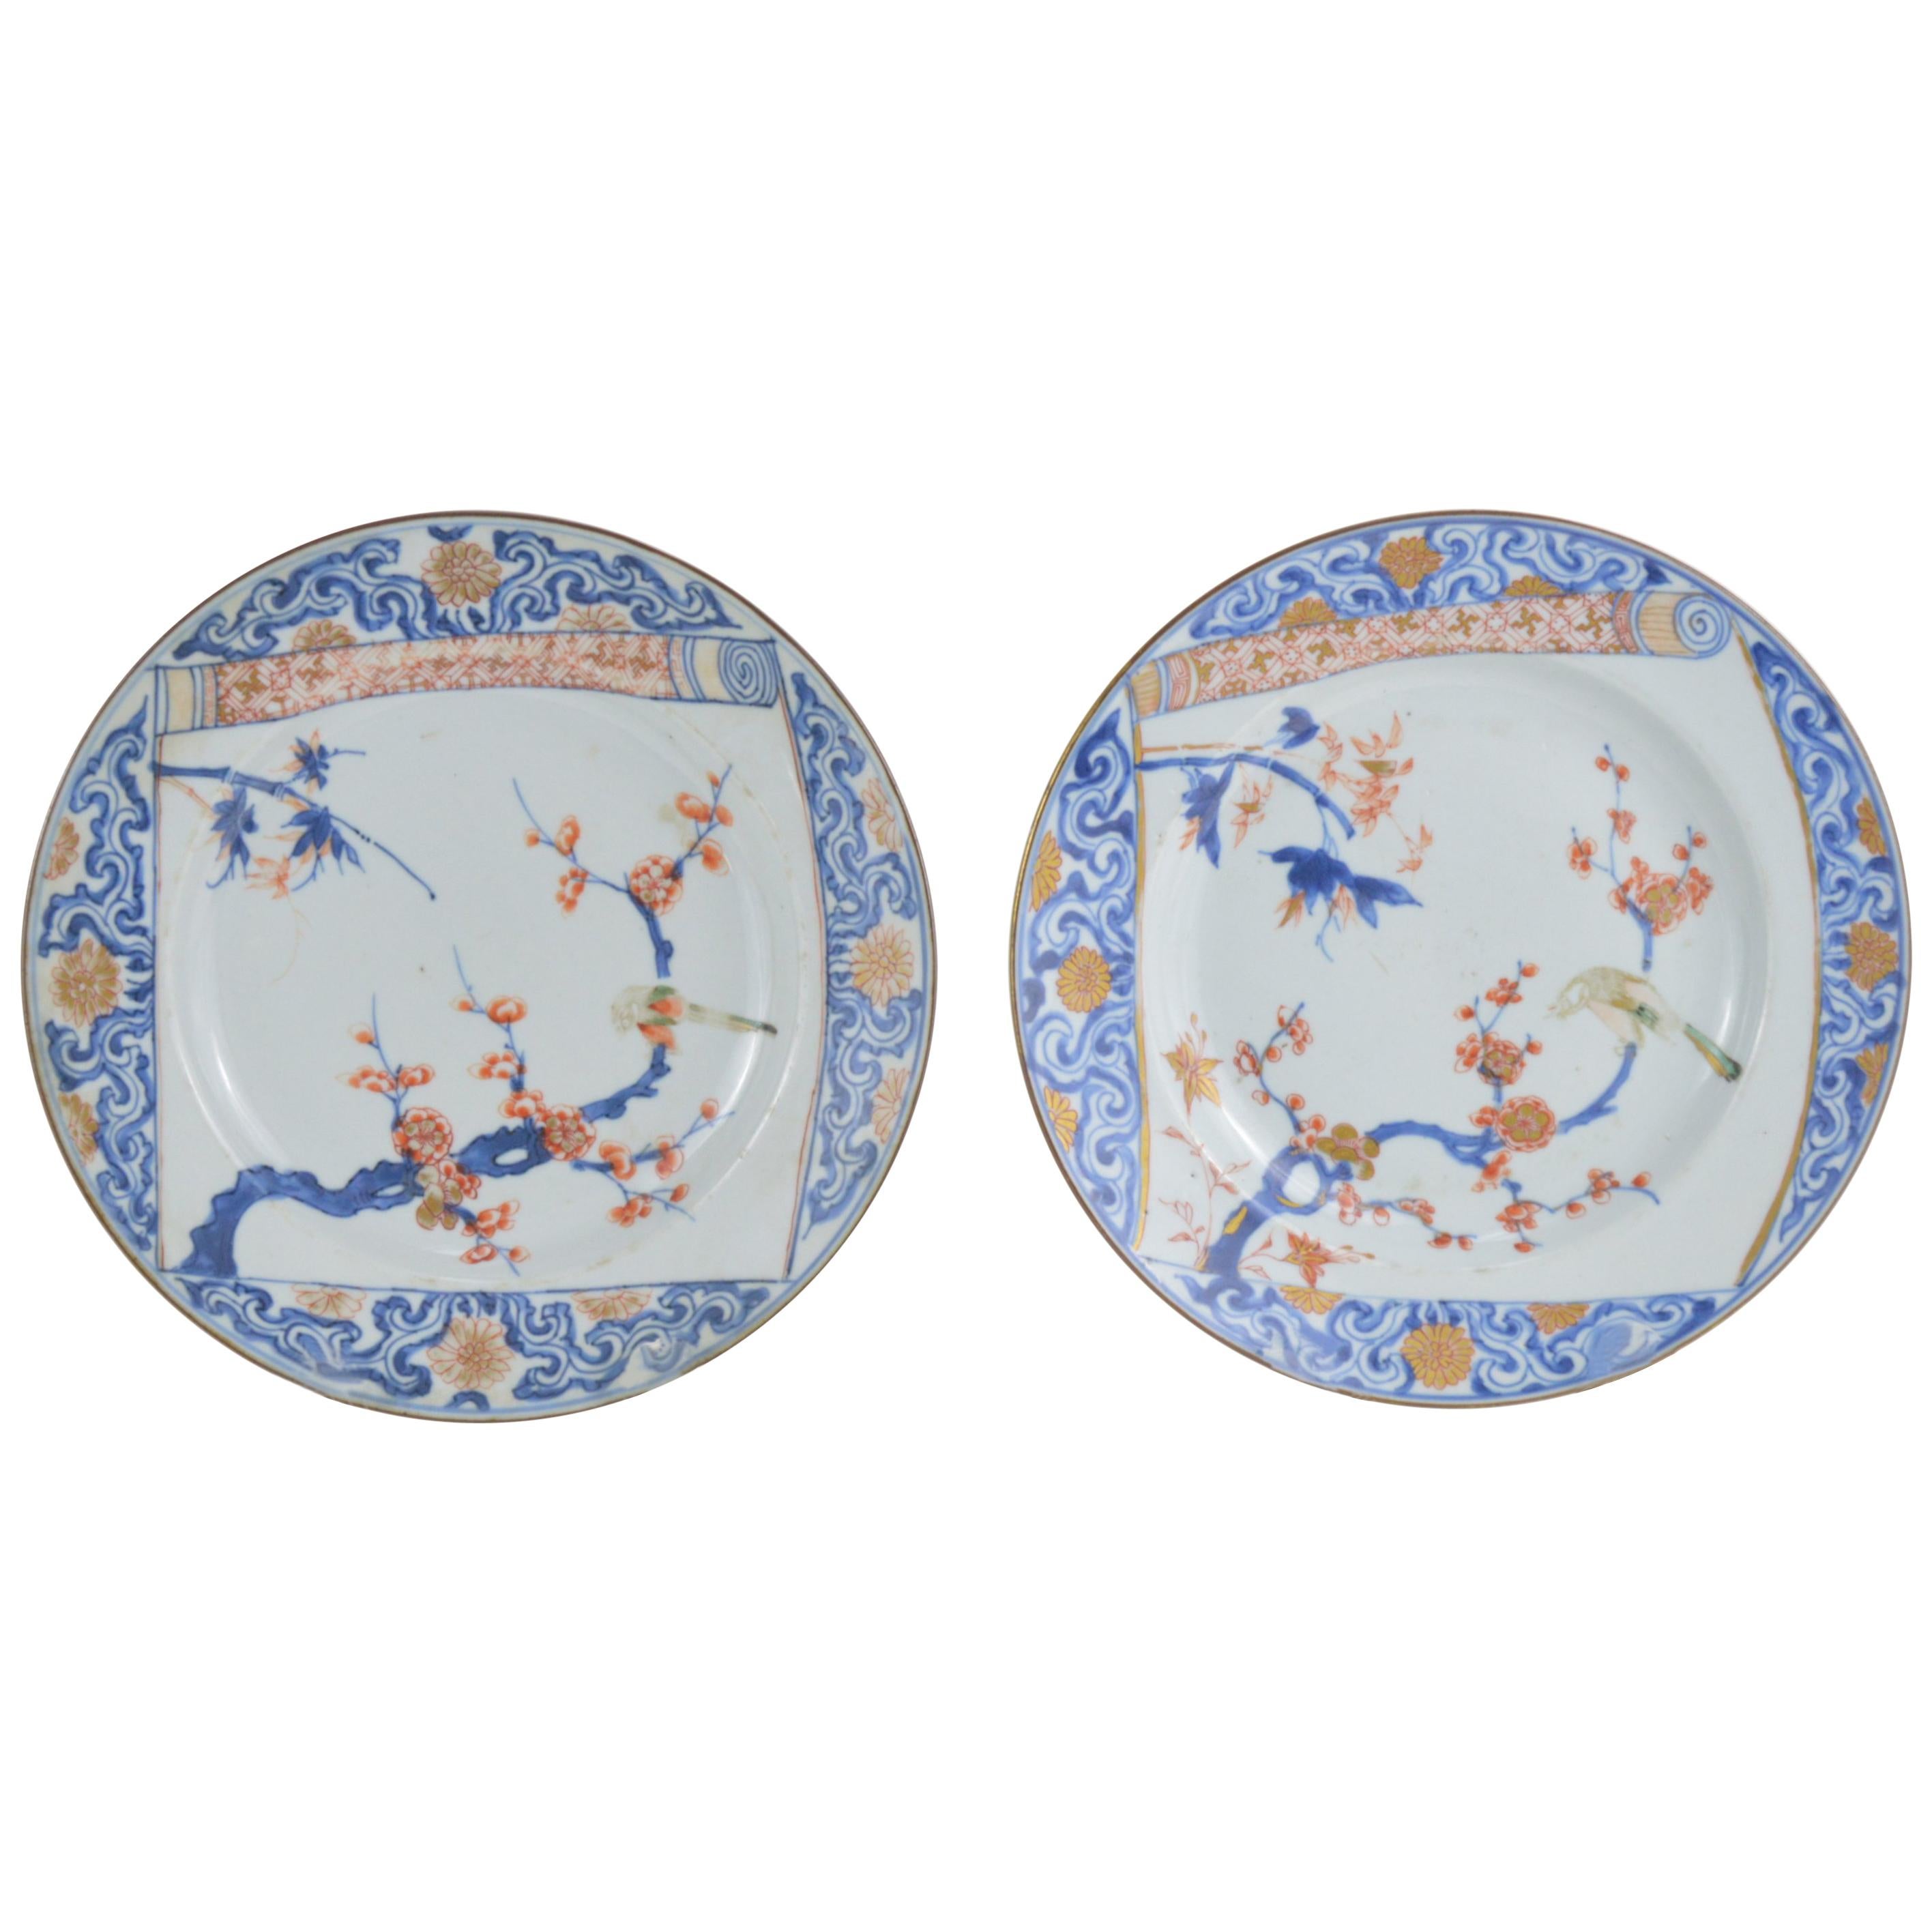 Pair of Antique Chinese Imari Plates 18th Century Kangxi Period